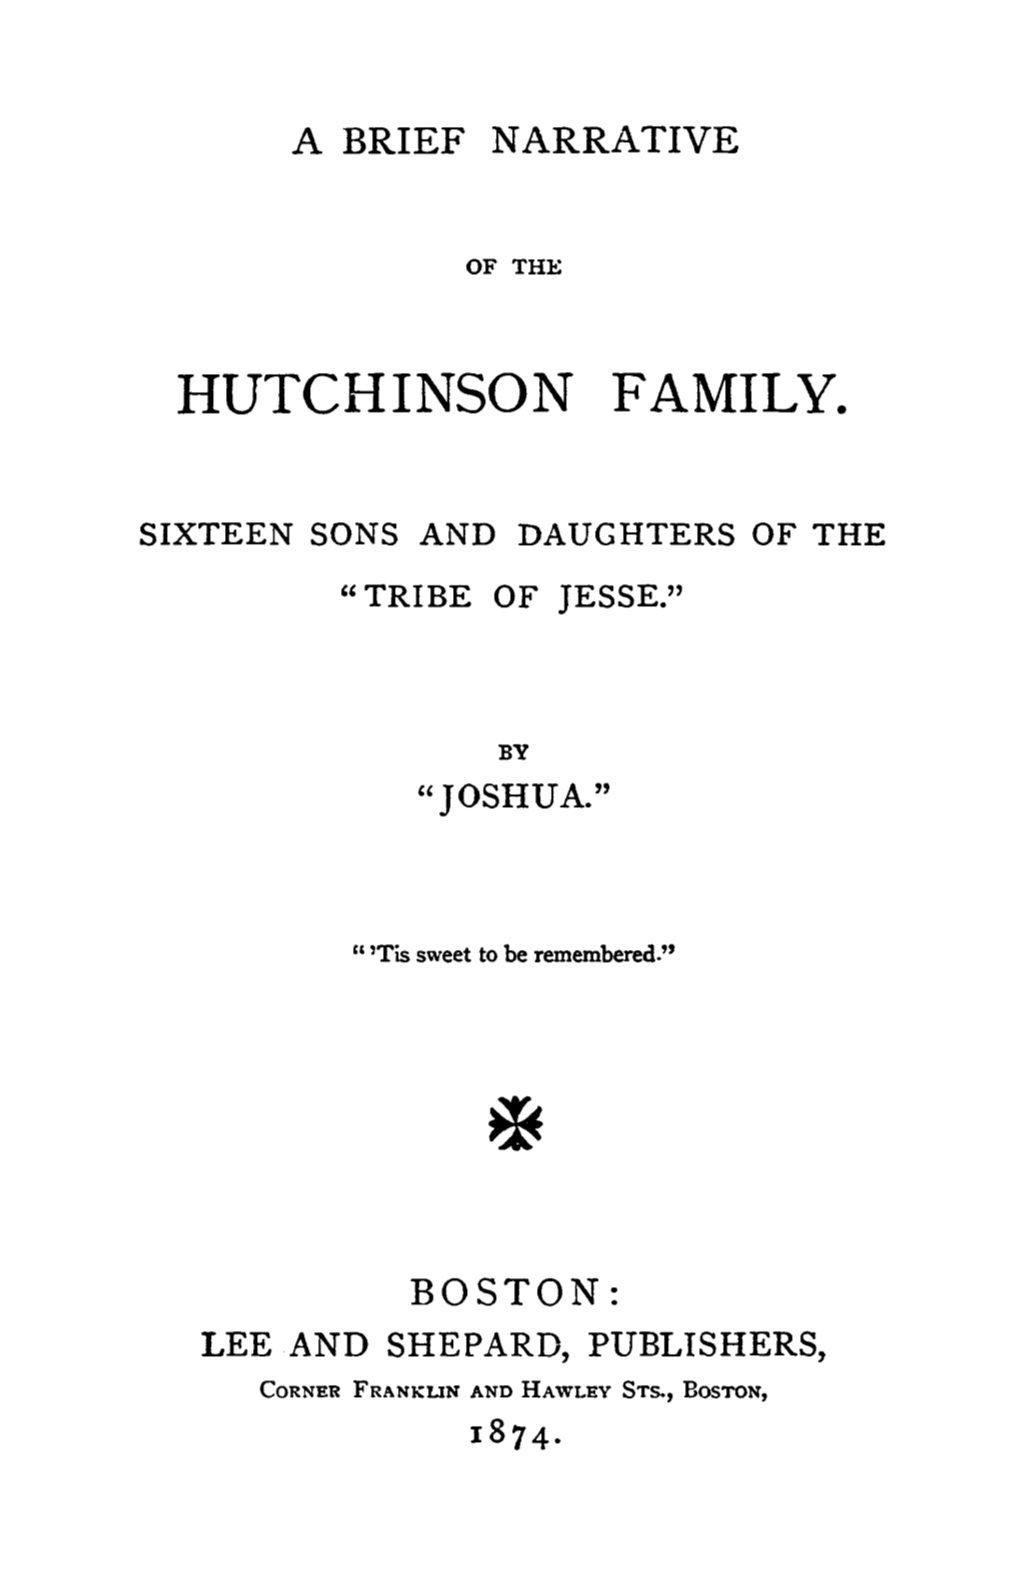 Hutchinson Family